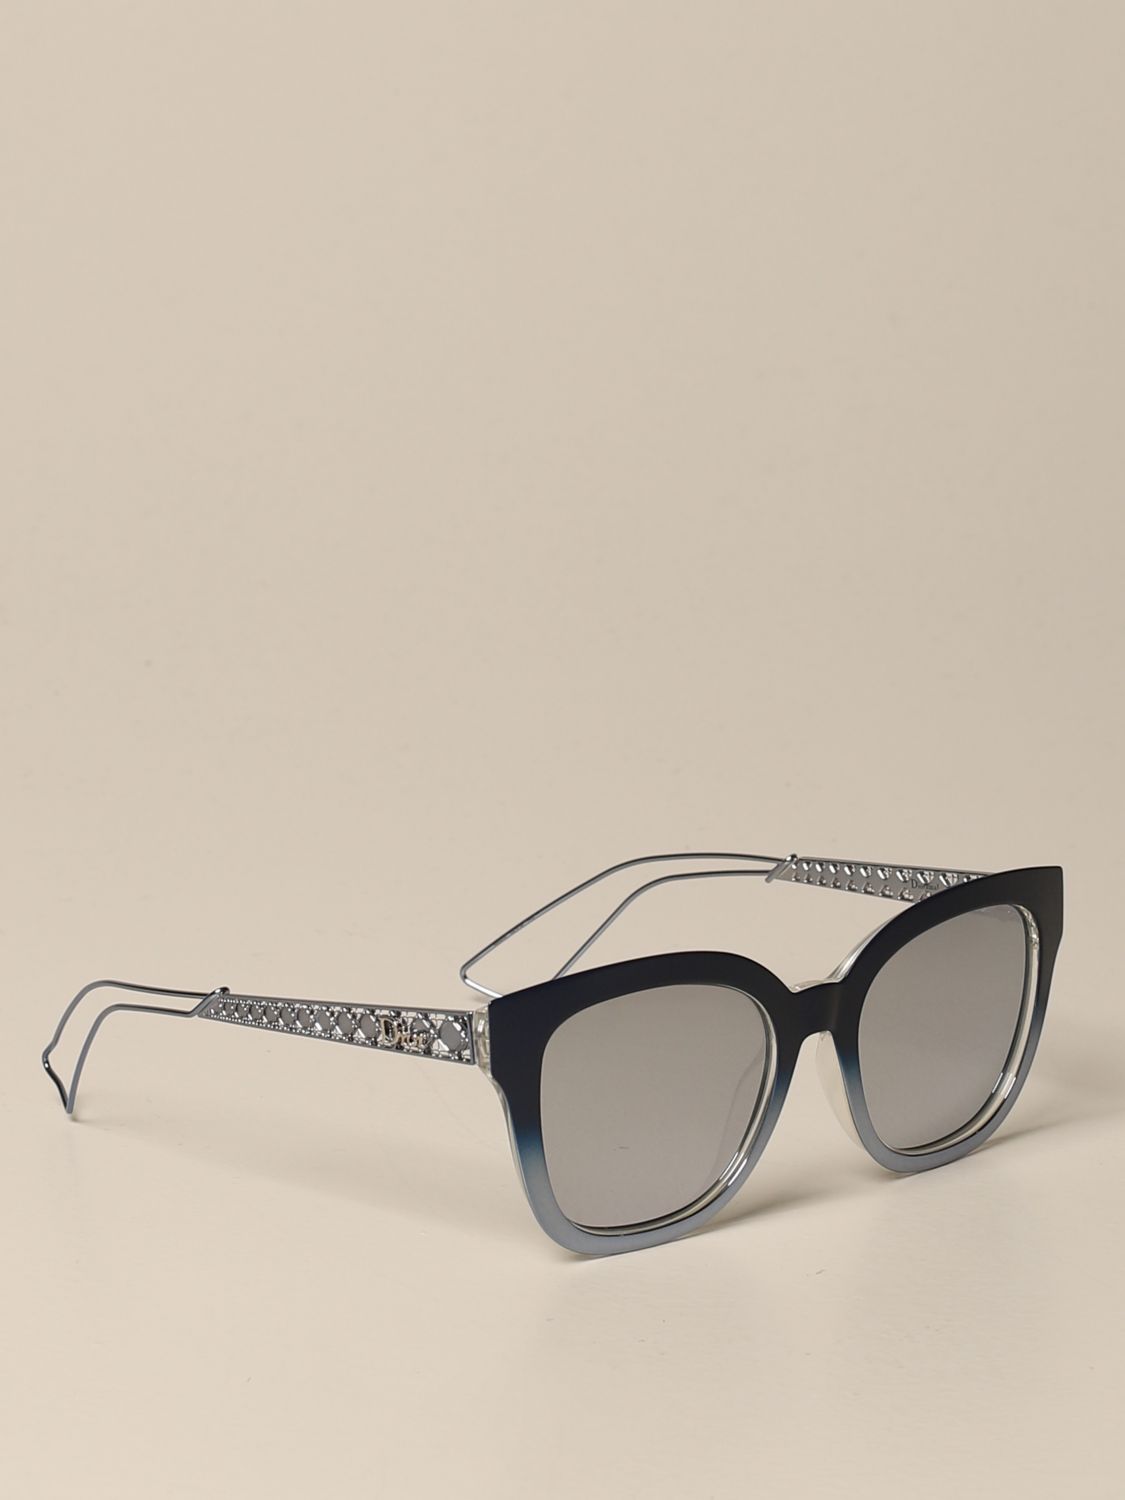 Dior  Sunglasses  DiorSoStellaire1  Translucent Blue  Dior Eyewear   Avvenice